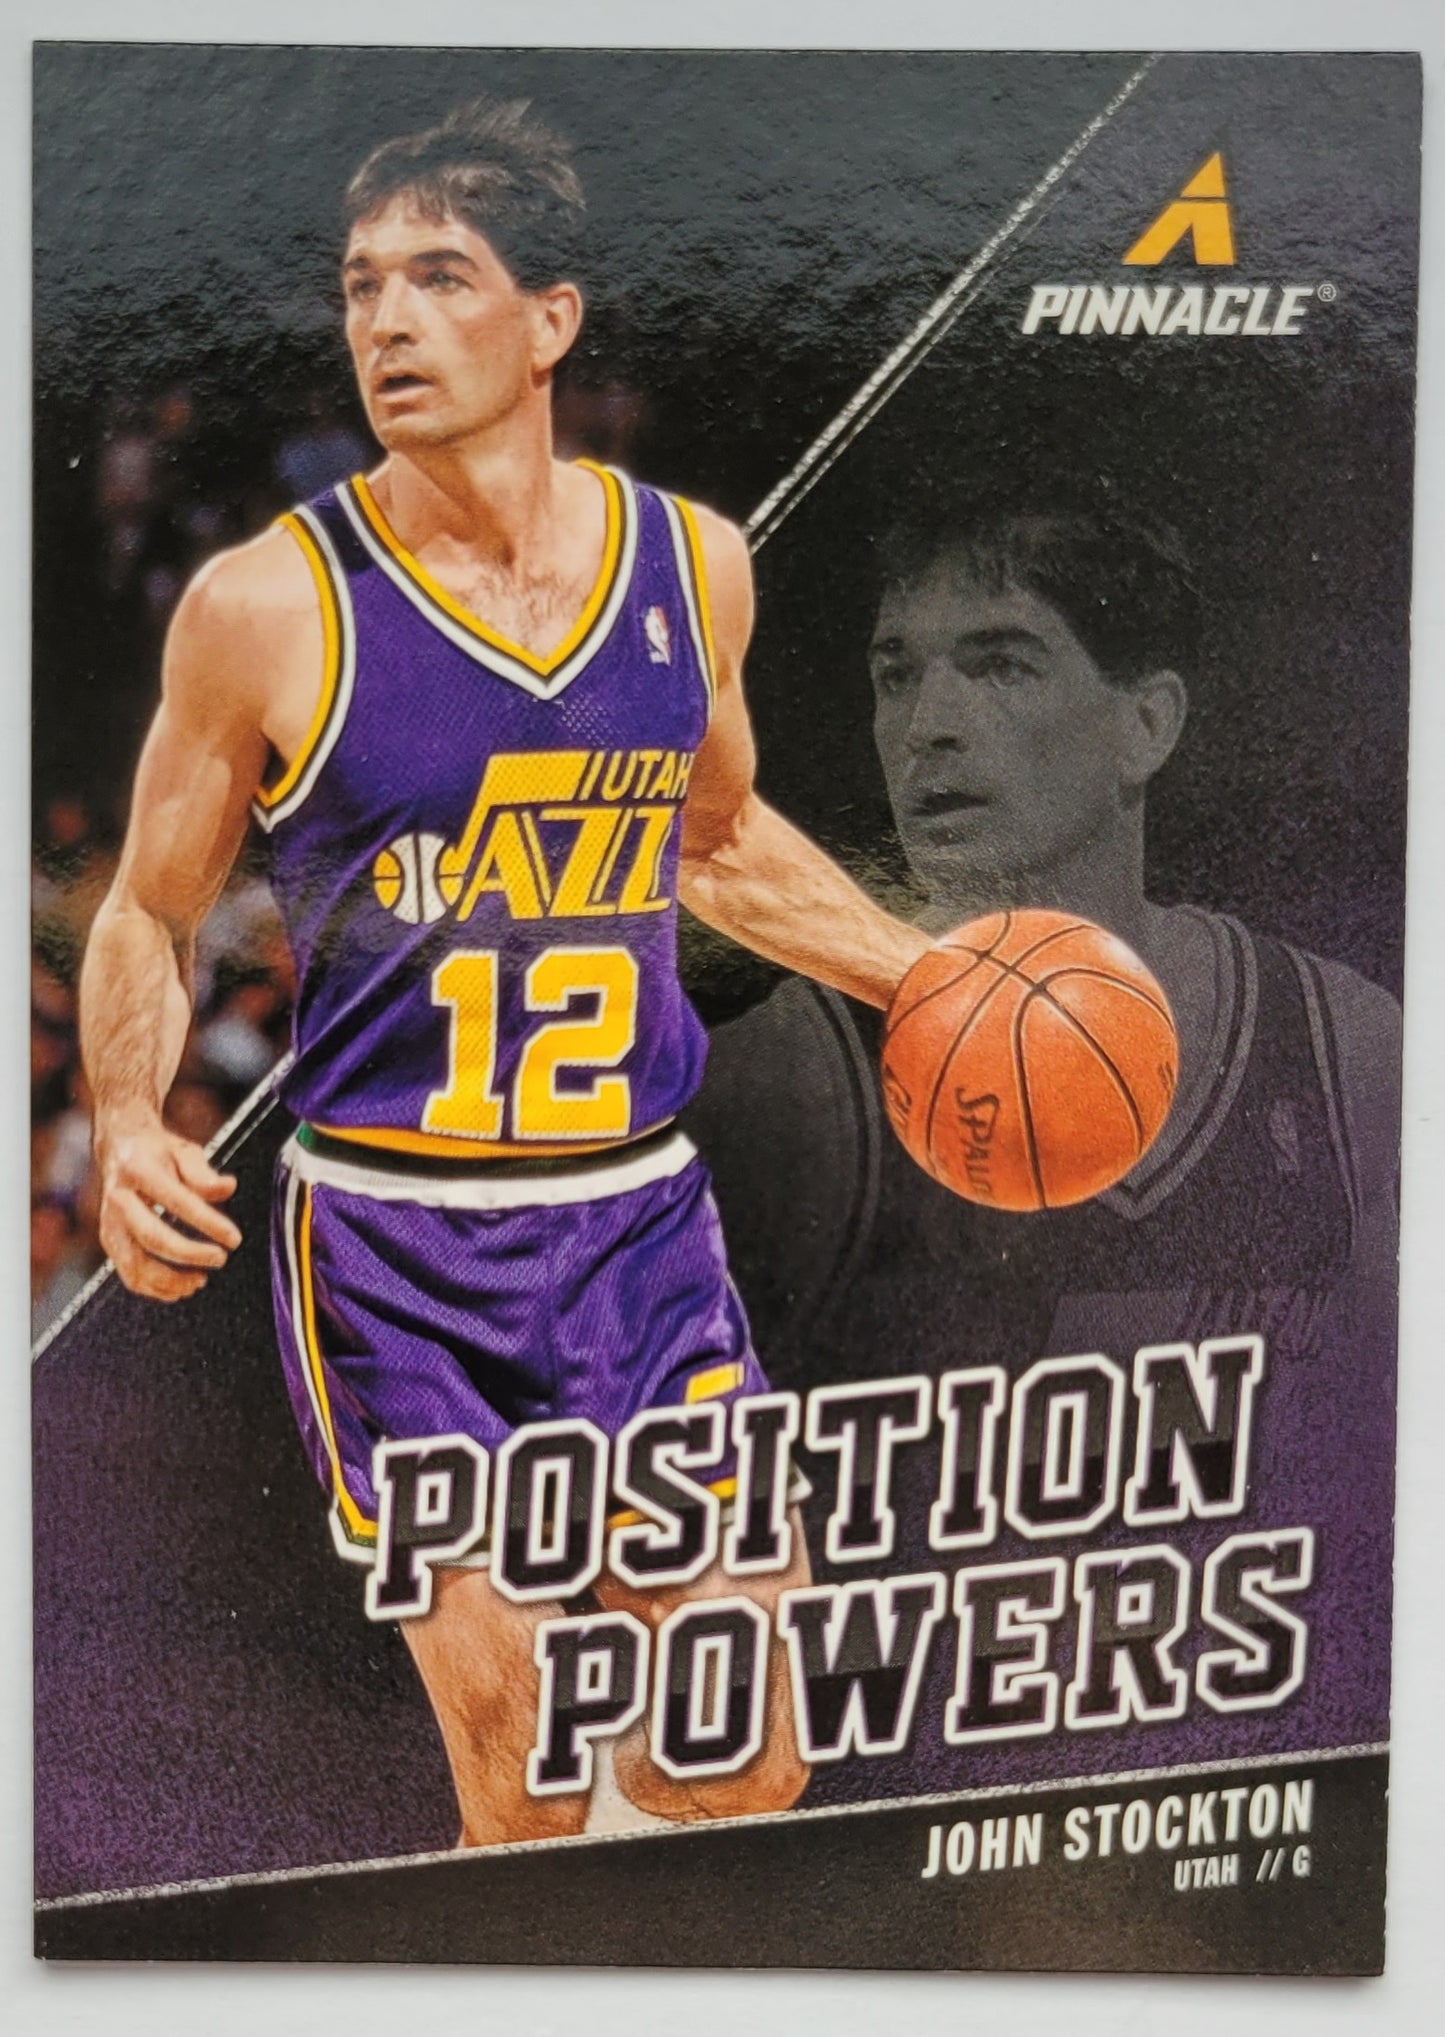 John Stockton - 2013-14 Pinnacle Position Powers #3